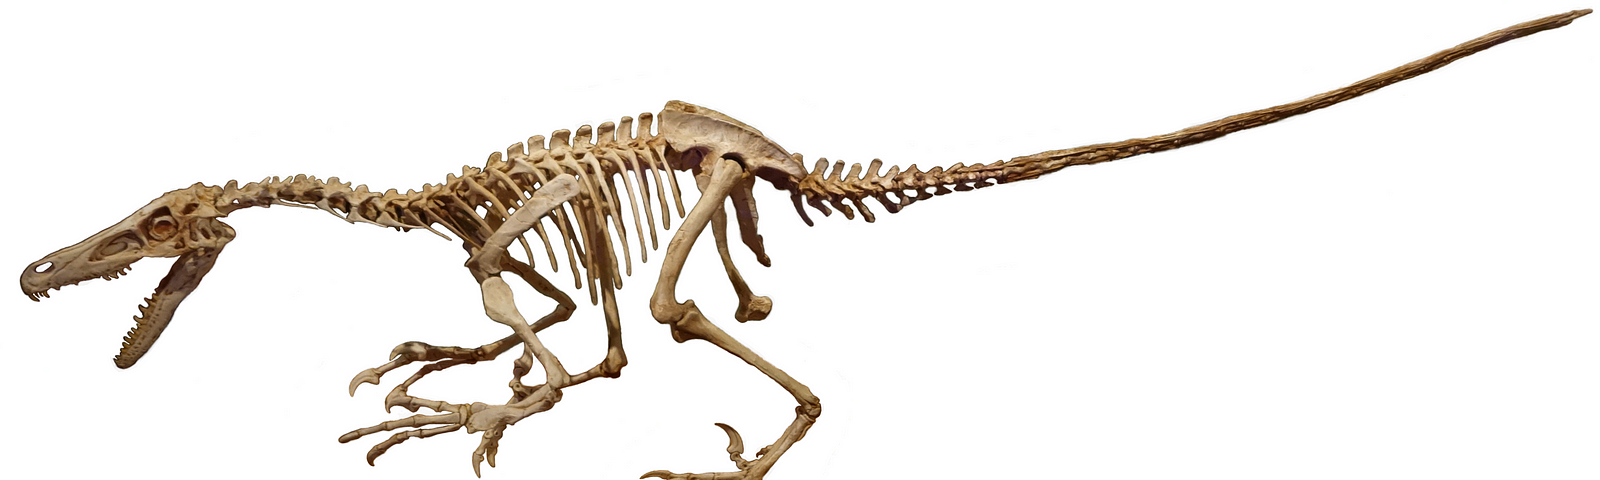 Velociraptor fossilized skeleton